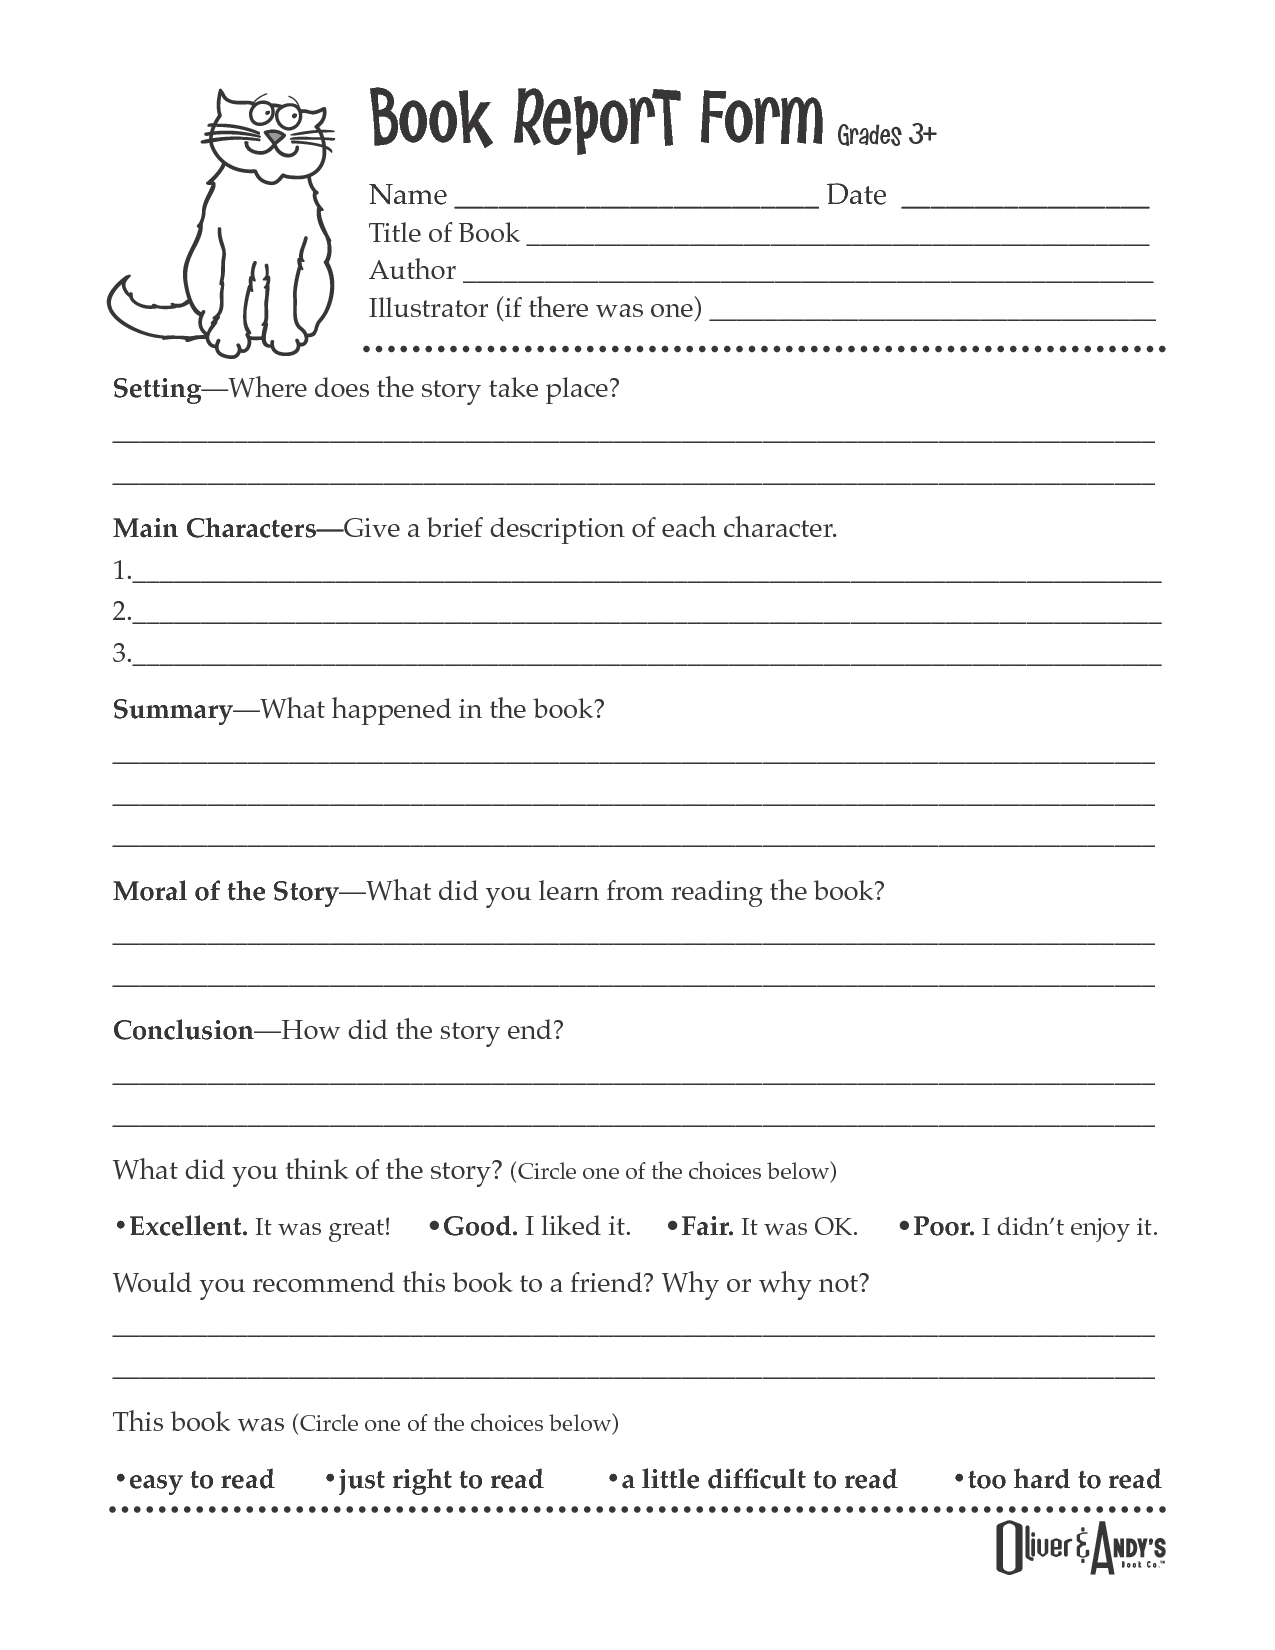 Second Grade Book Report Template  Book Report Form Grades intended for Second Grade Book Report Template